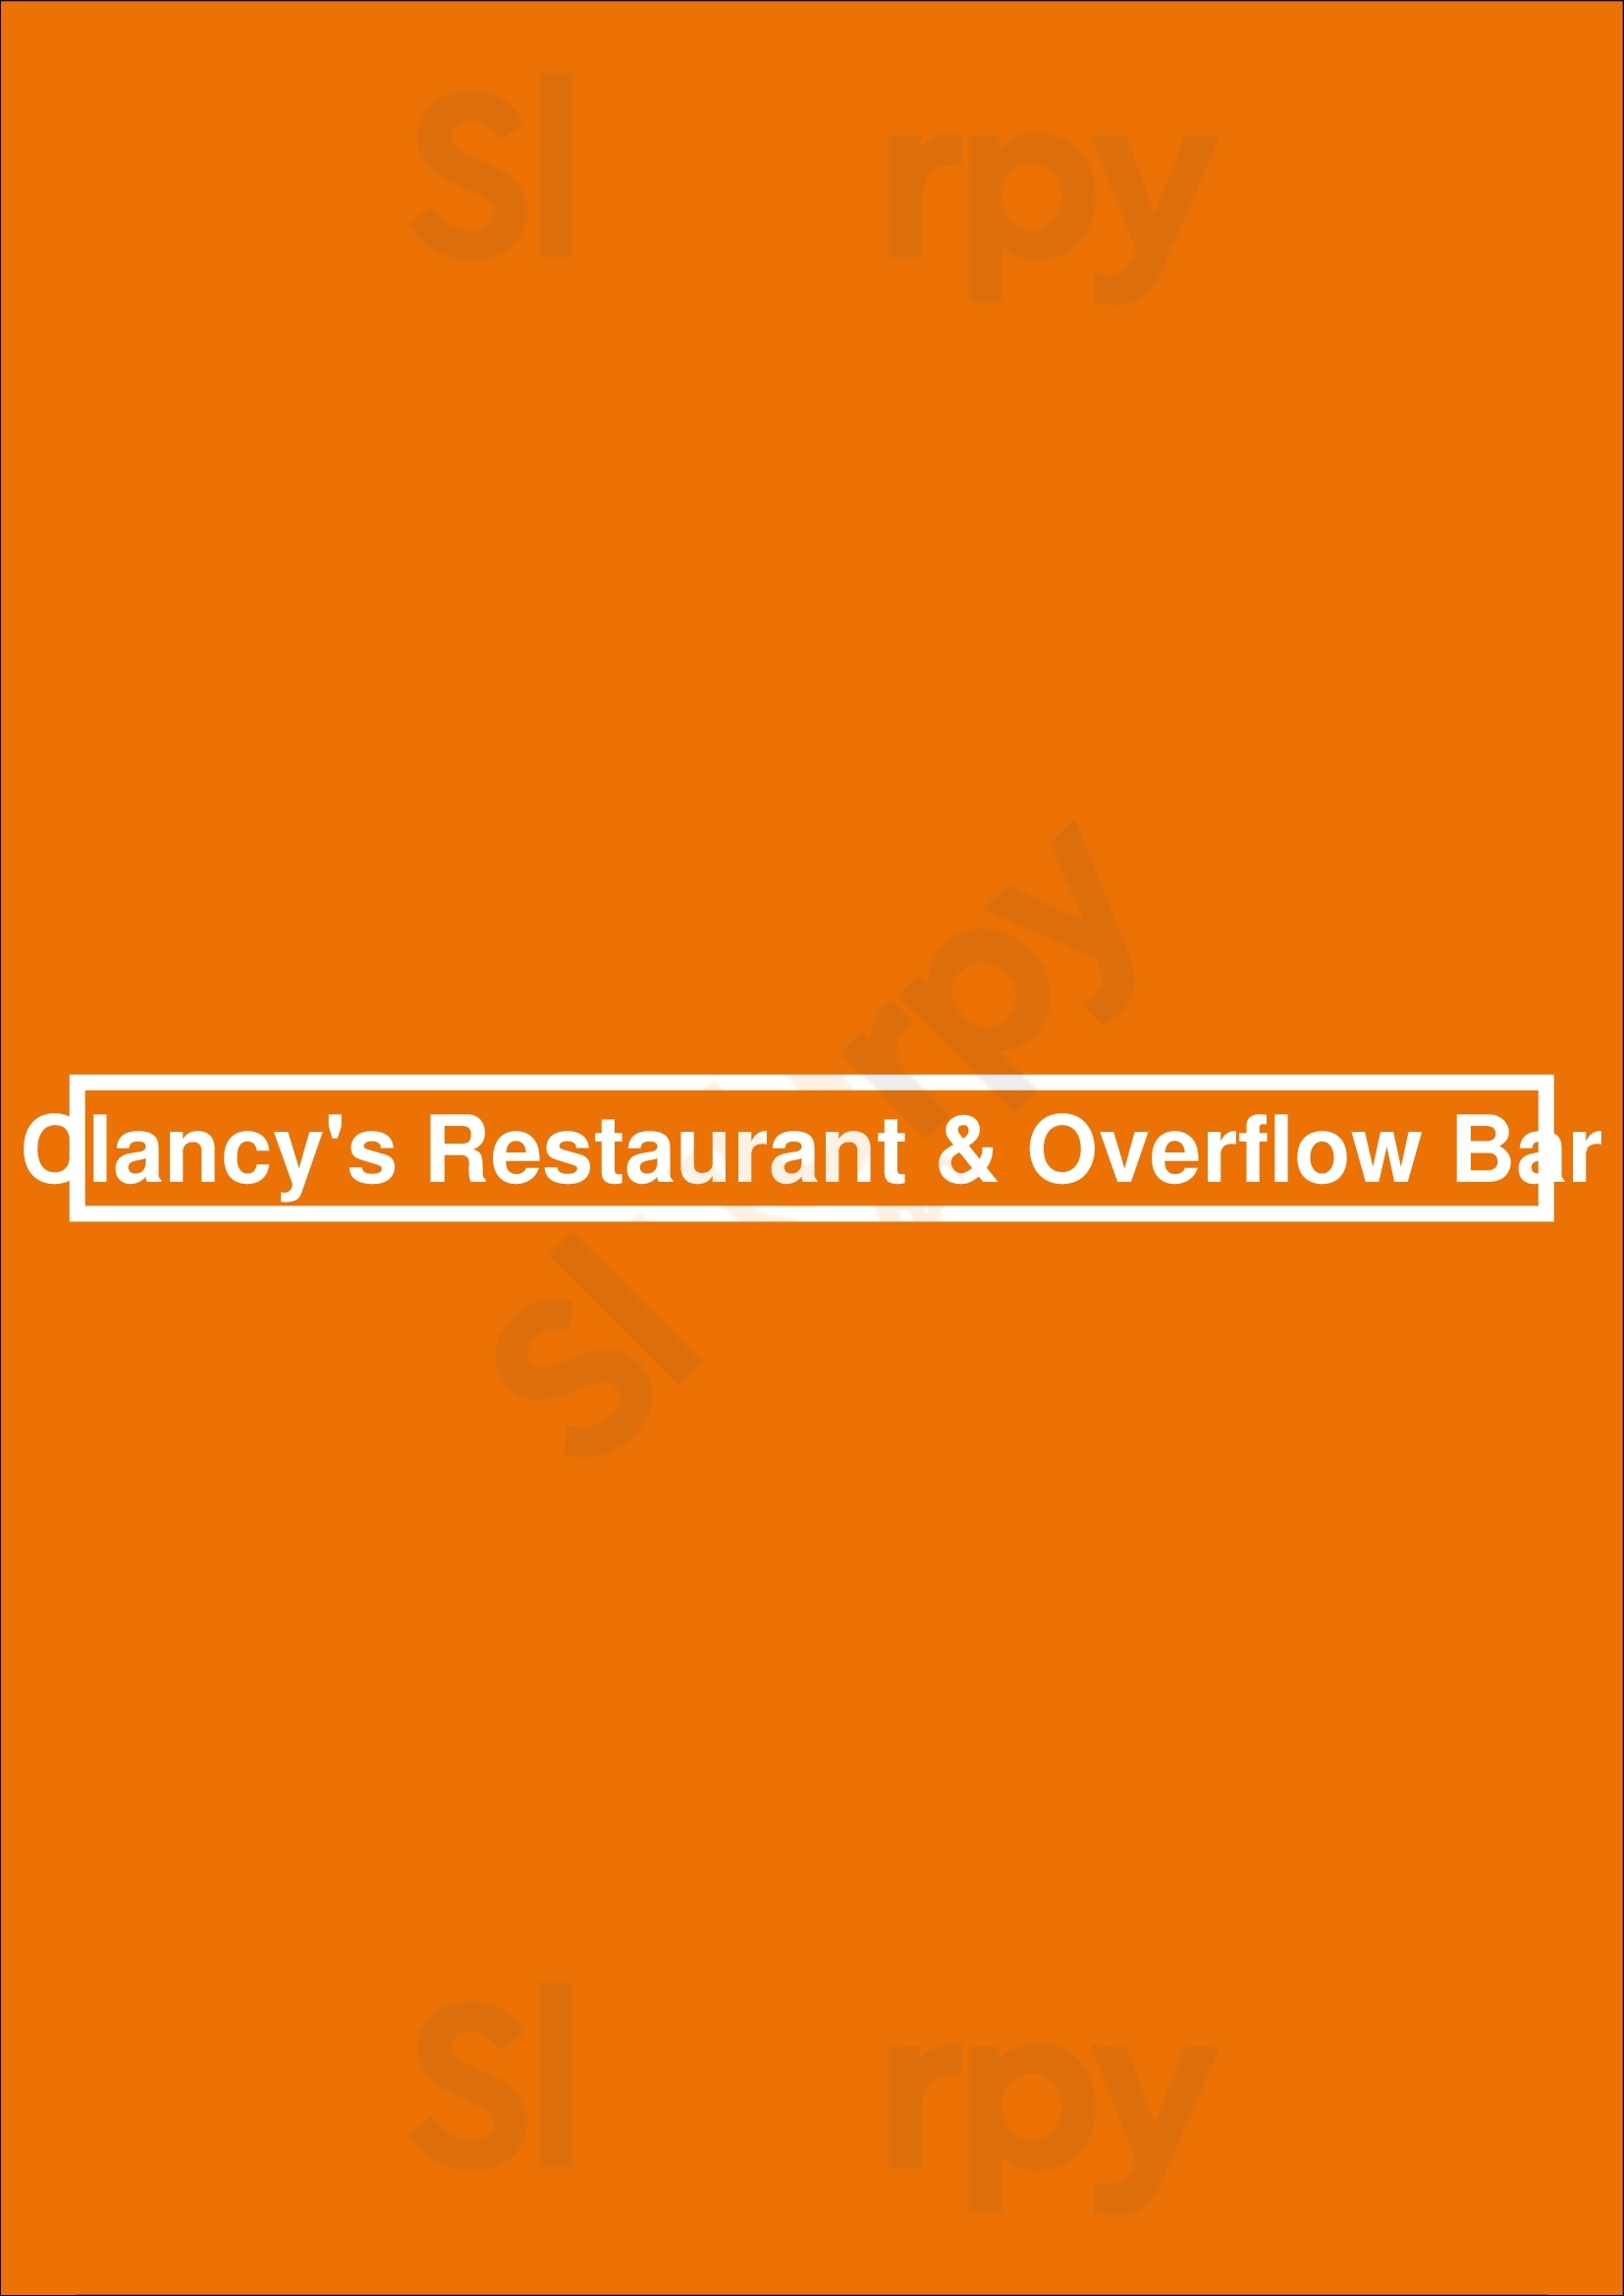 Clancy's Restaurant & Overflow Bar Wagga Wagga Menu - 1